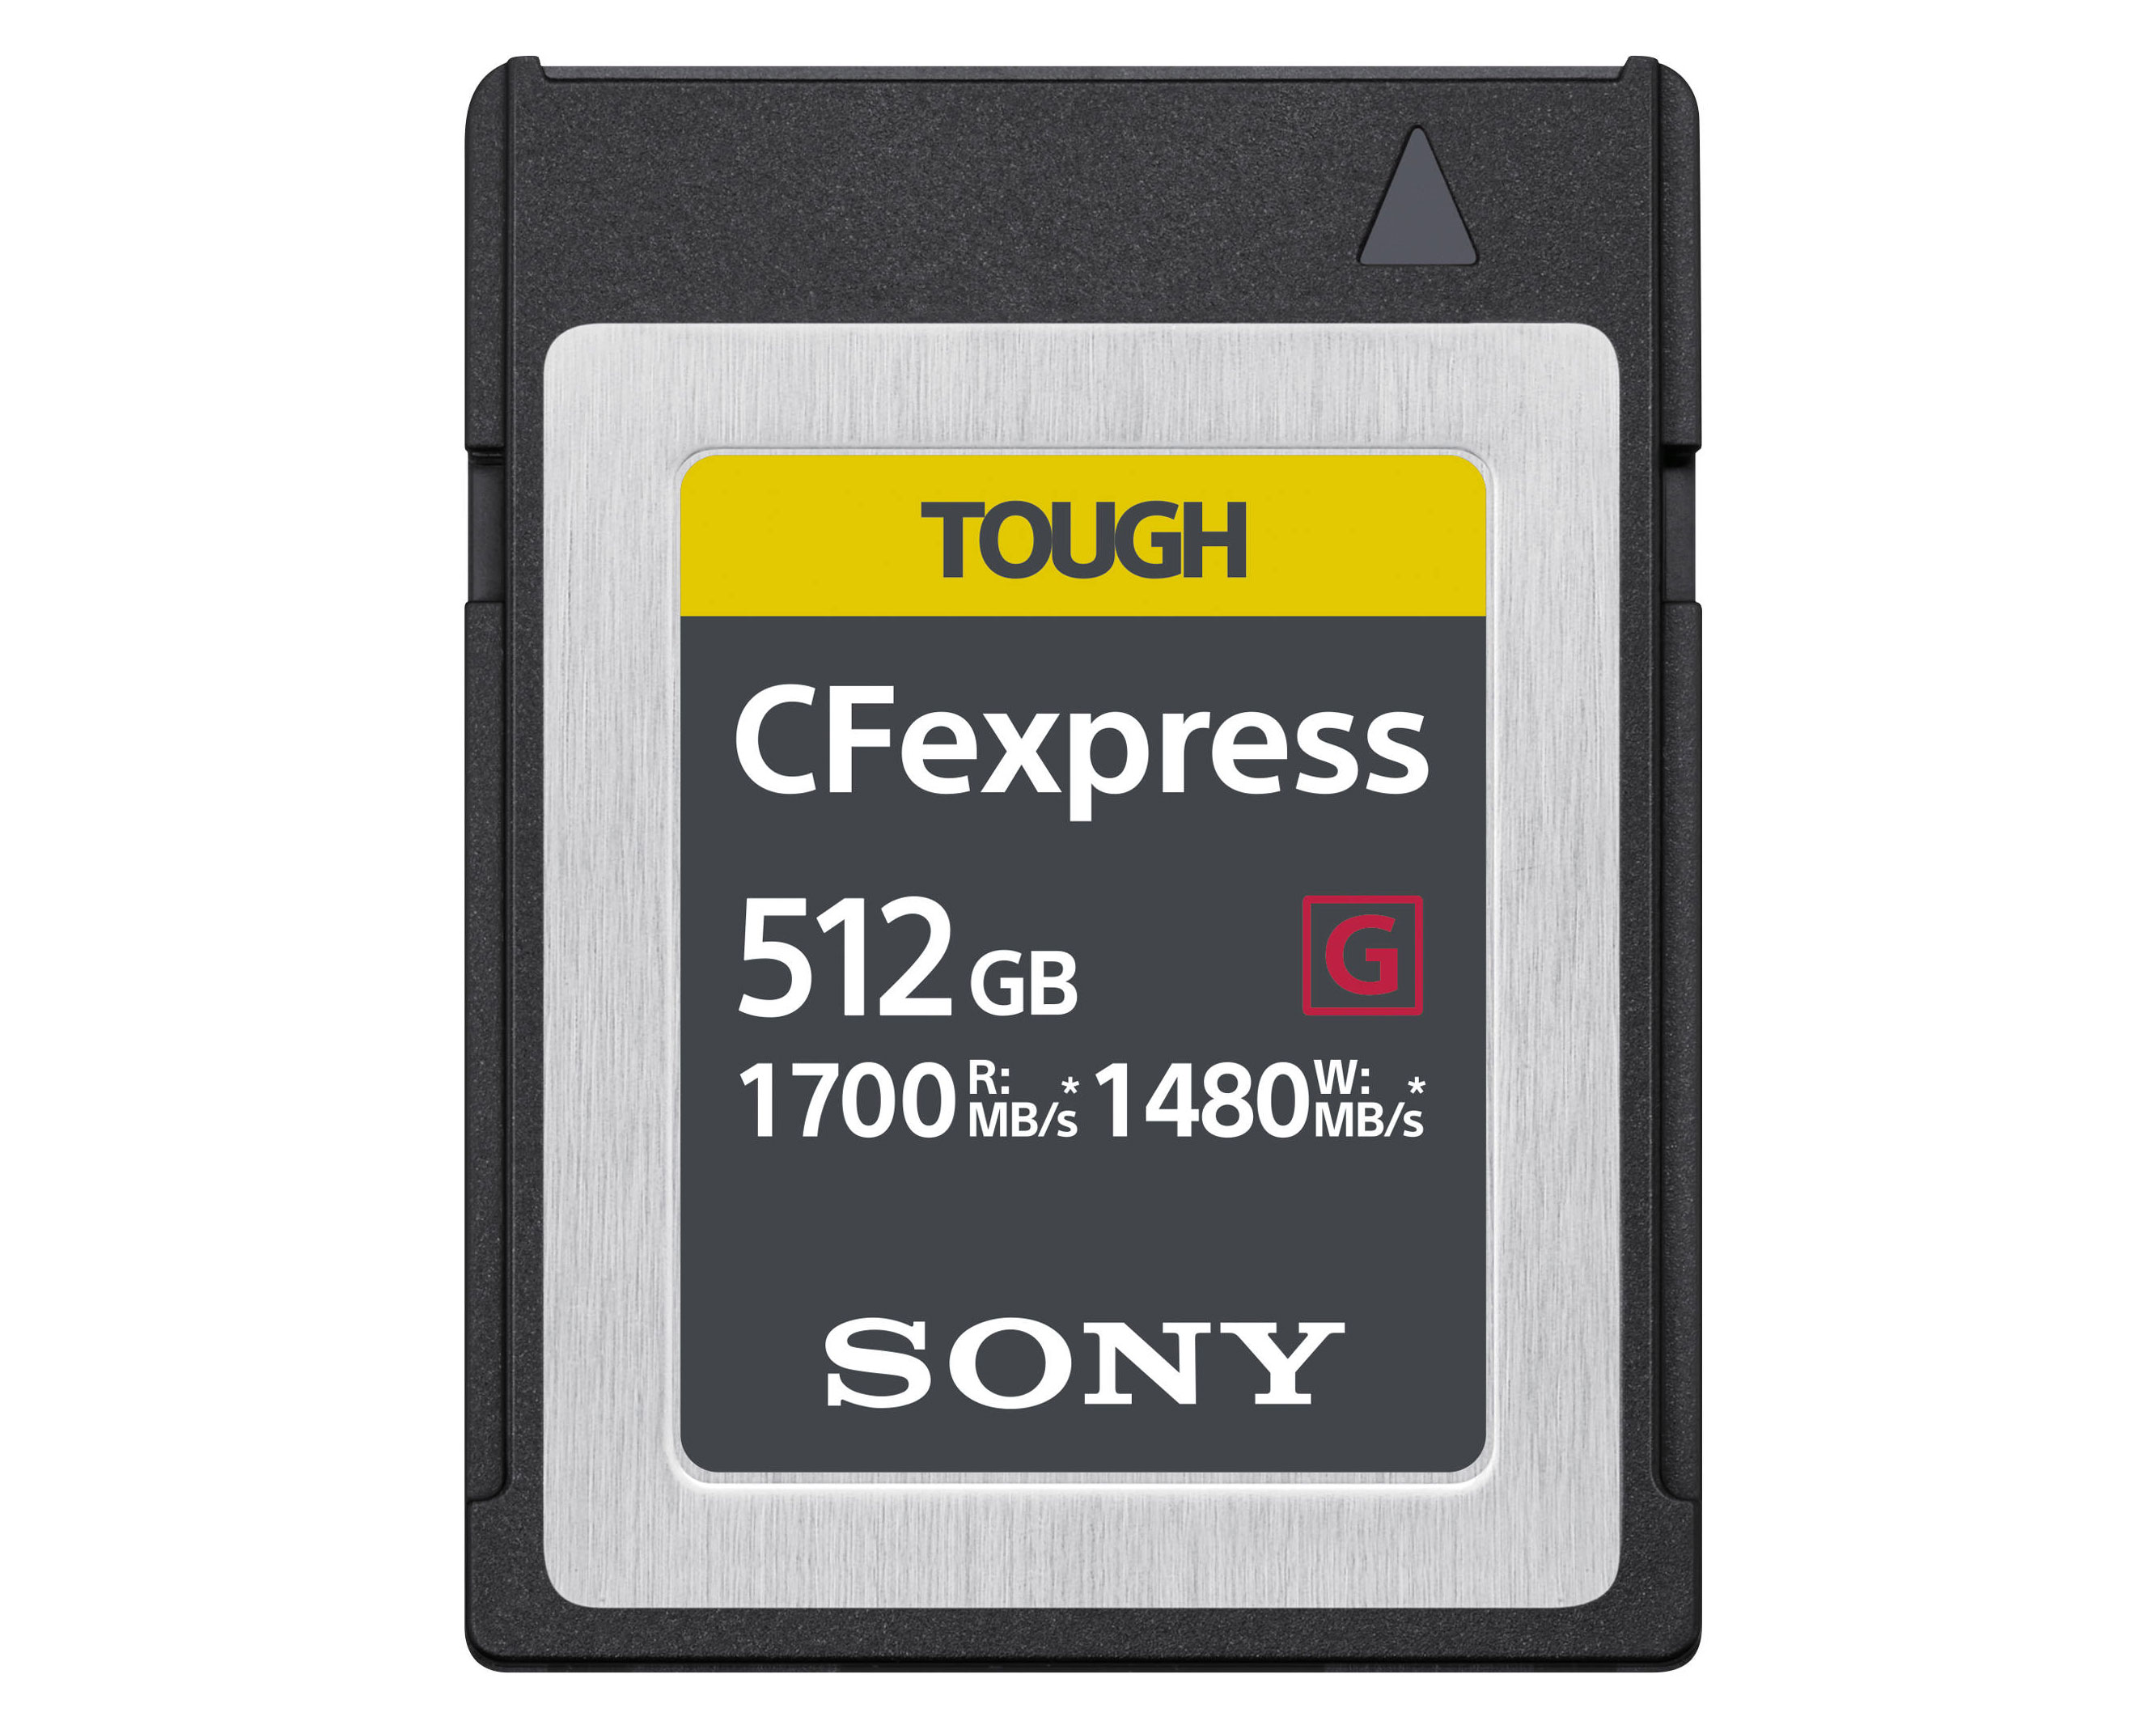 Sony CFexpress Tough G 512GB